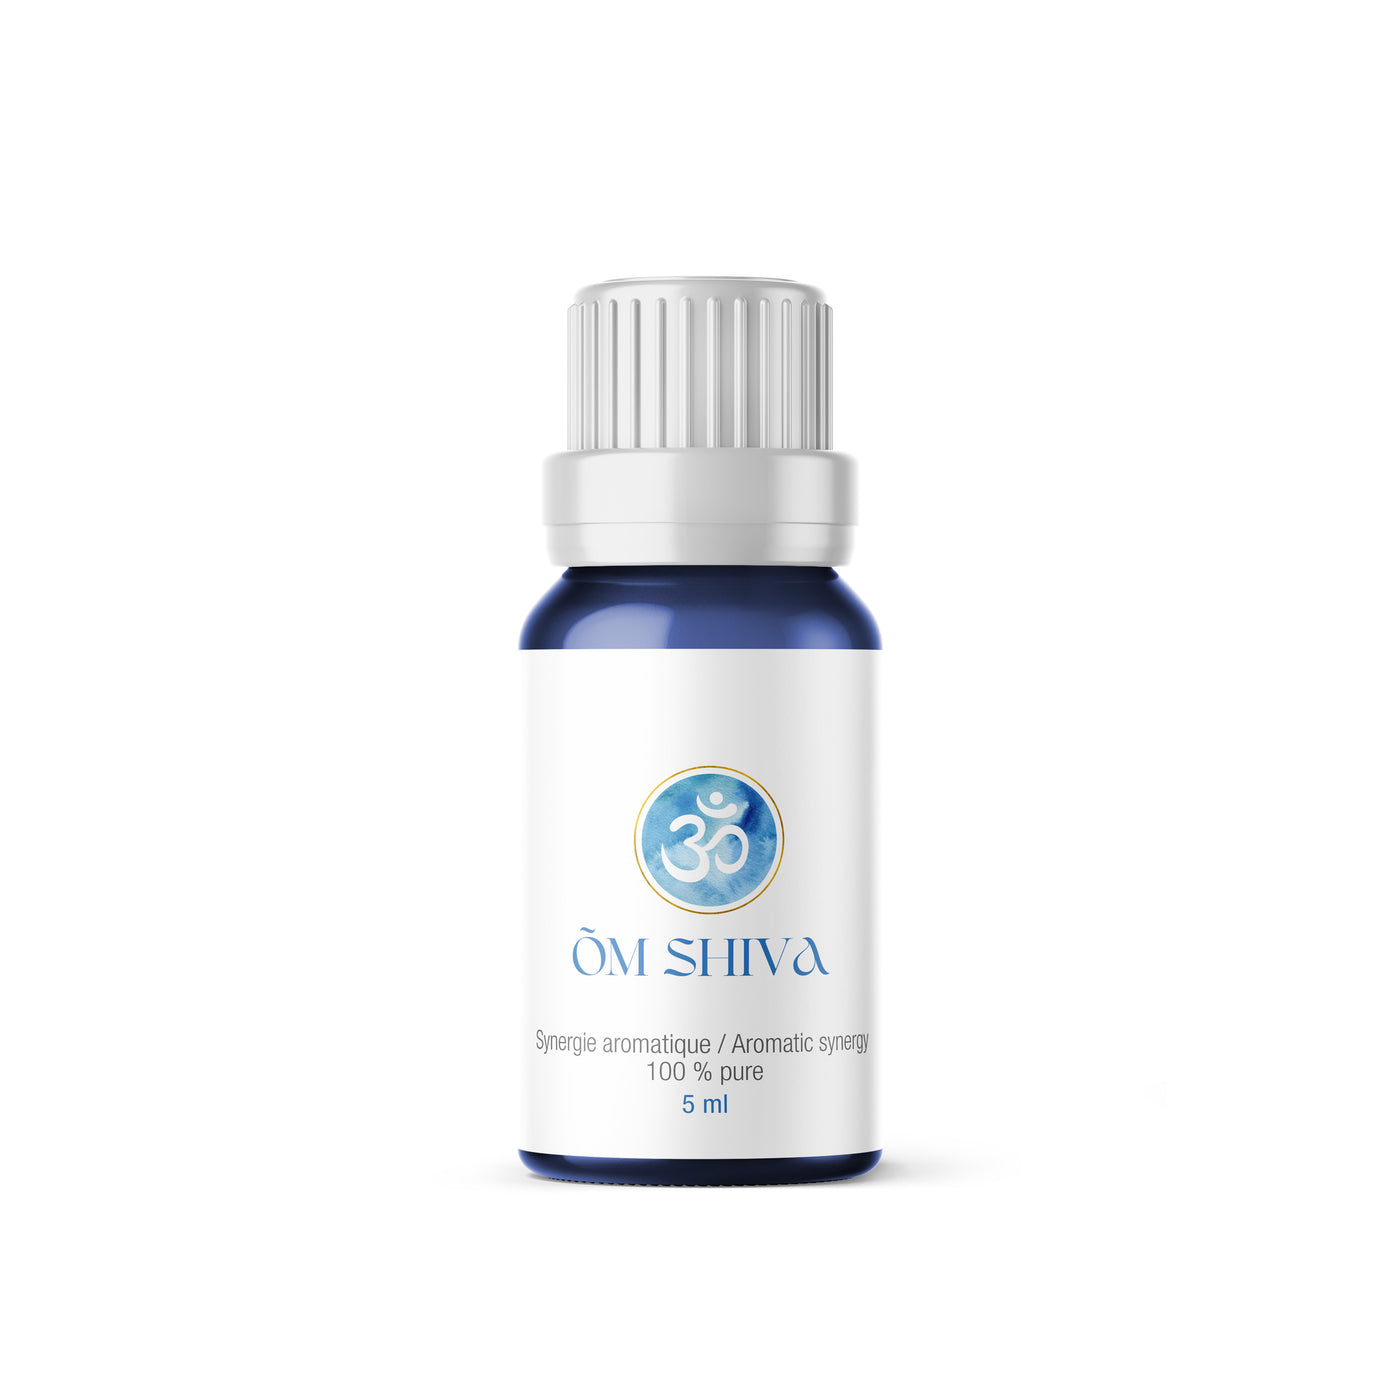 Õm Shiva - synergie aromatique 100% pure